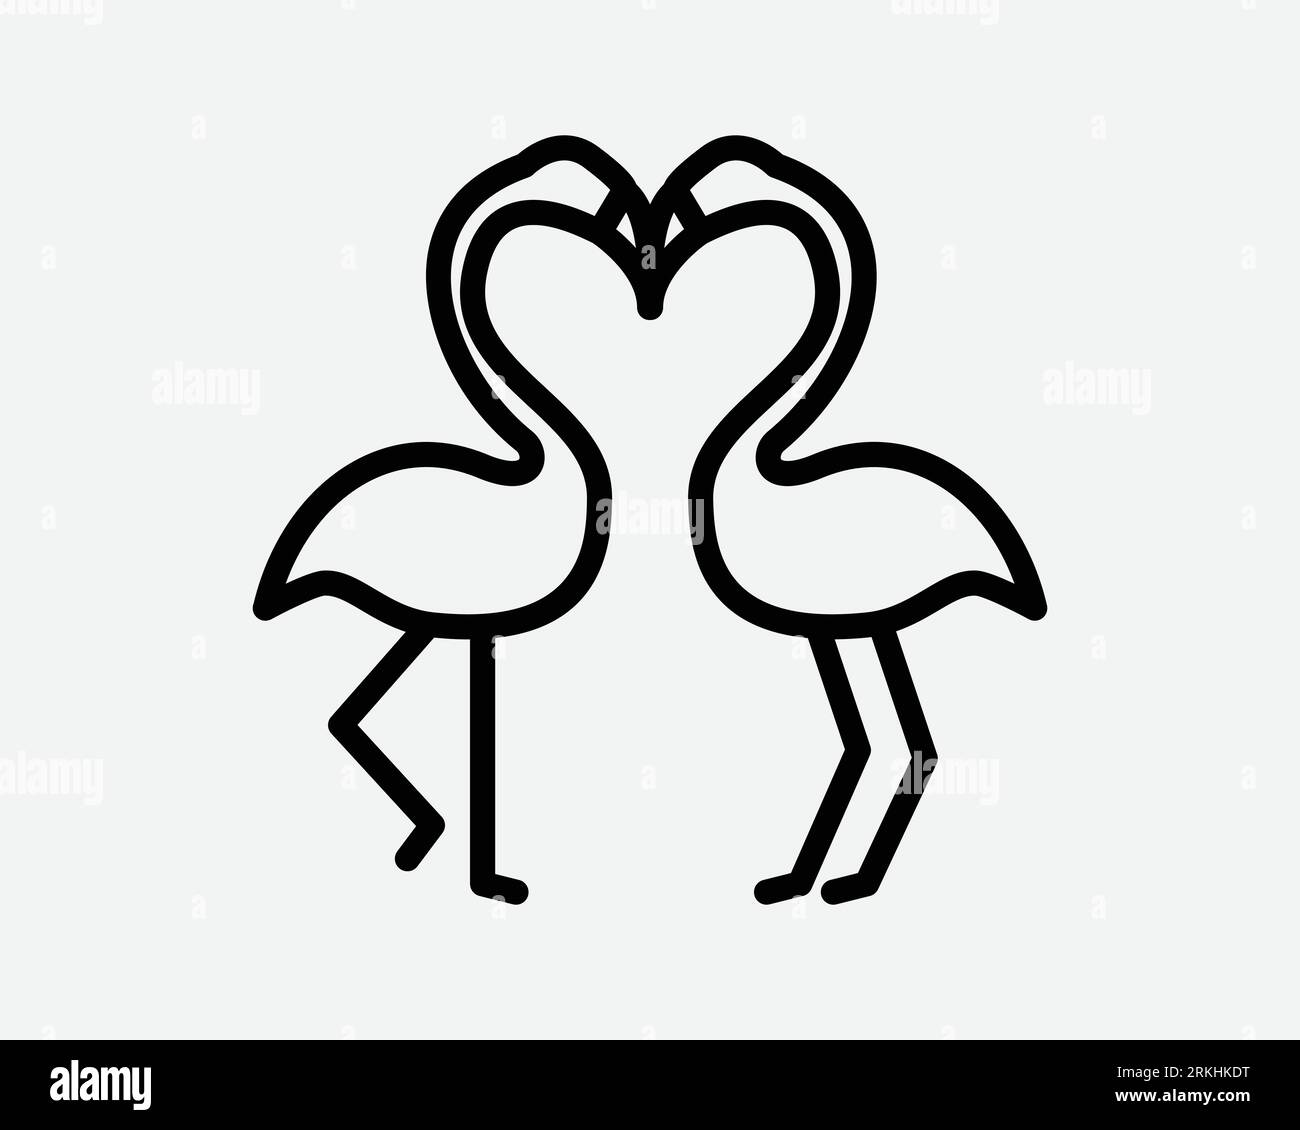 Flamingo Line Icon Two Bird Love Lover Pair Romance Romantic Wildlife Animal Zoo Nature Together Cartoon Black White Outline Shape Sign Symbol Vector Stock Vector